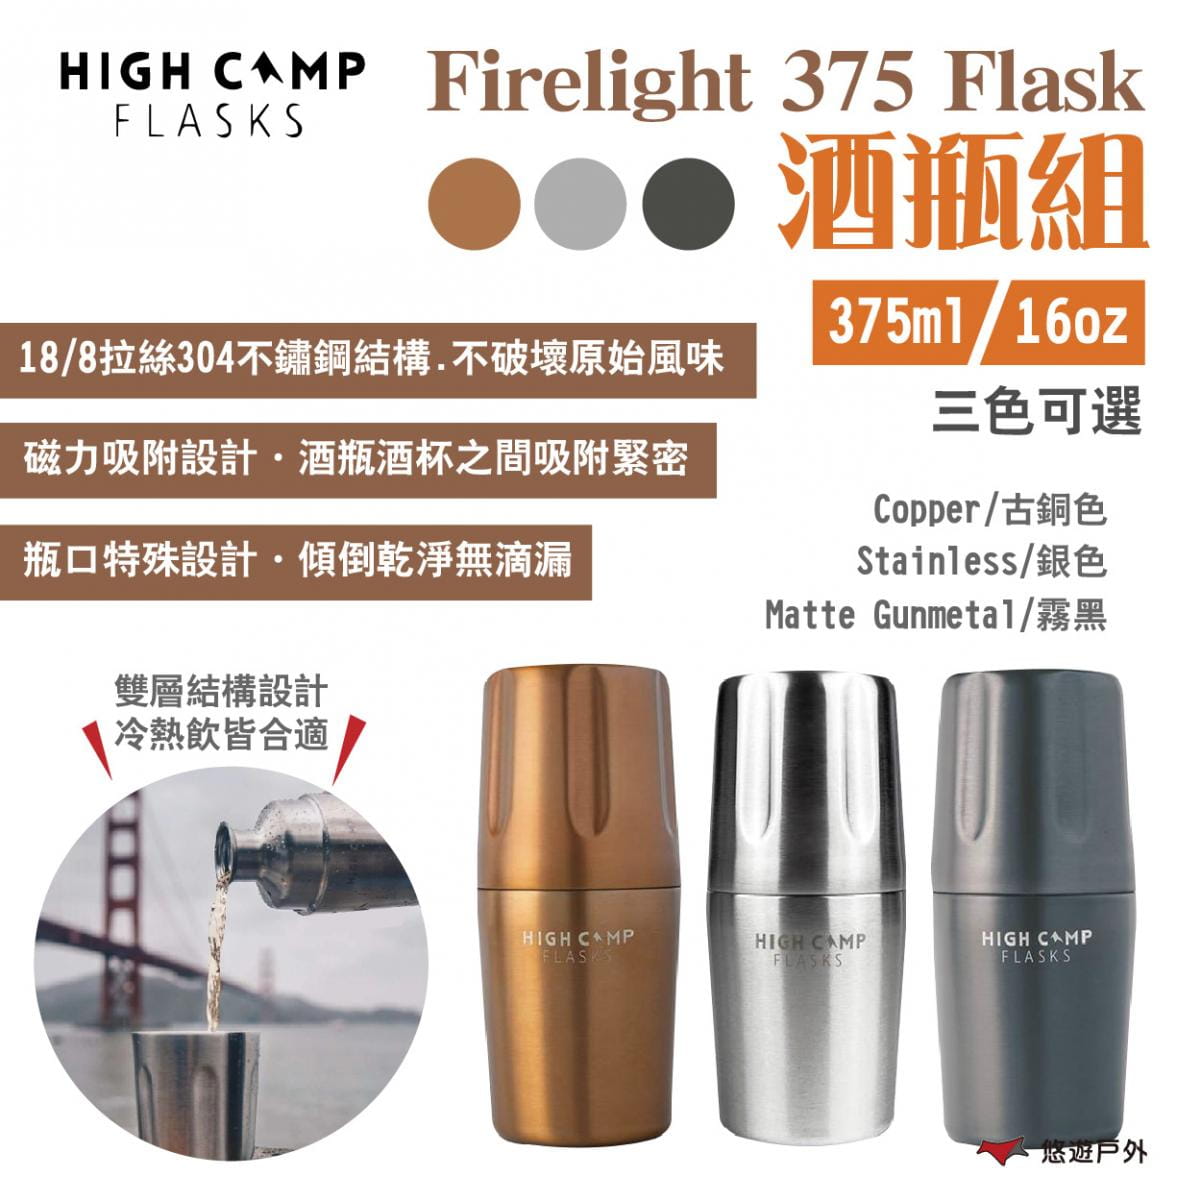 【HIGH CAMP】Firelight 375 Flask 酒瓶組_375ml (悠遊戶外) 0